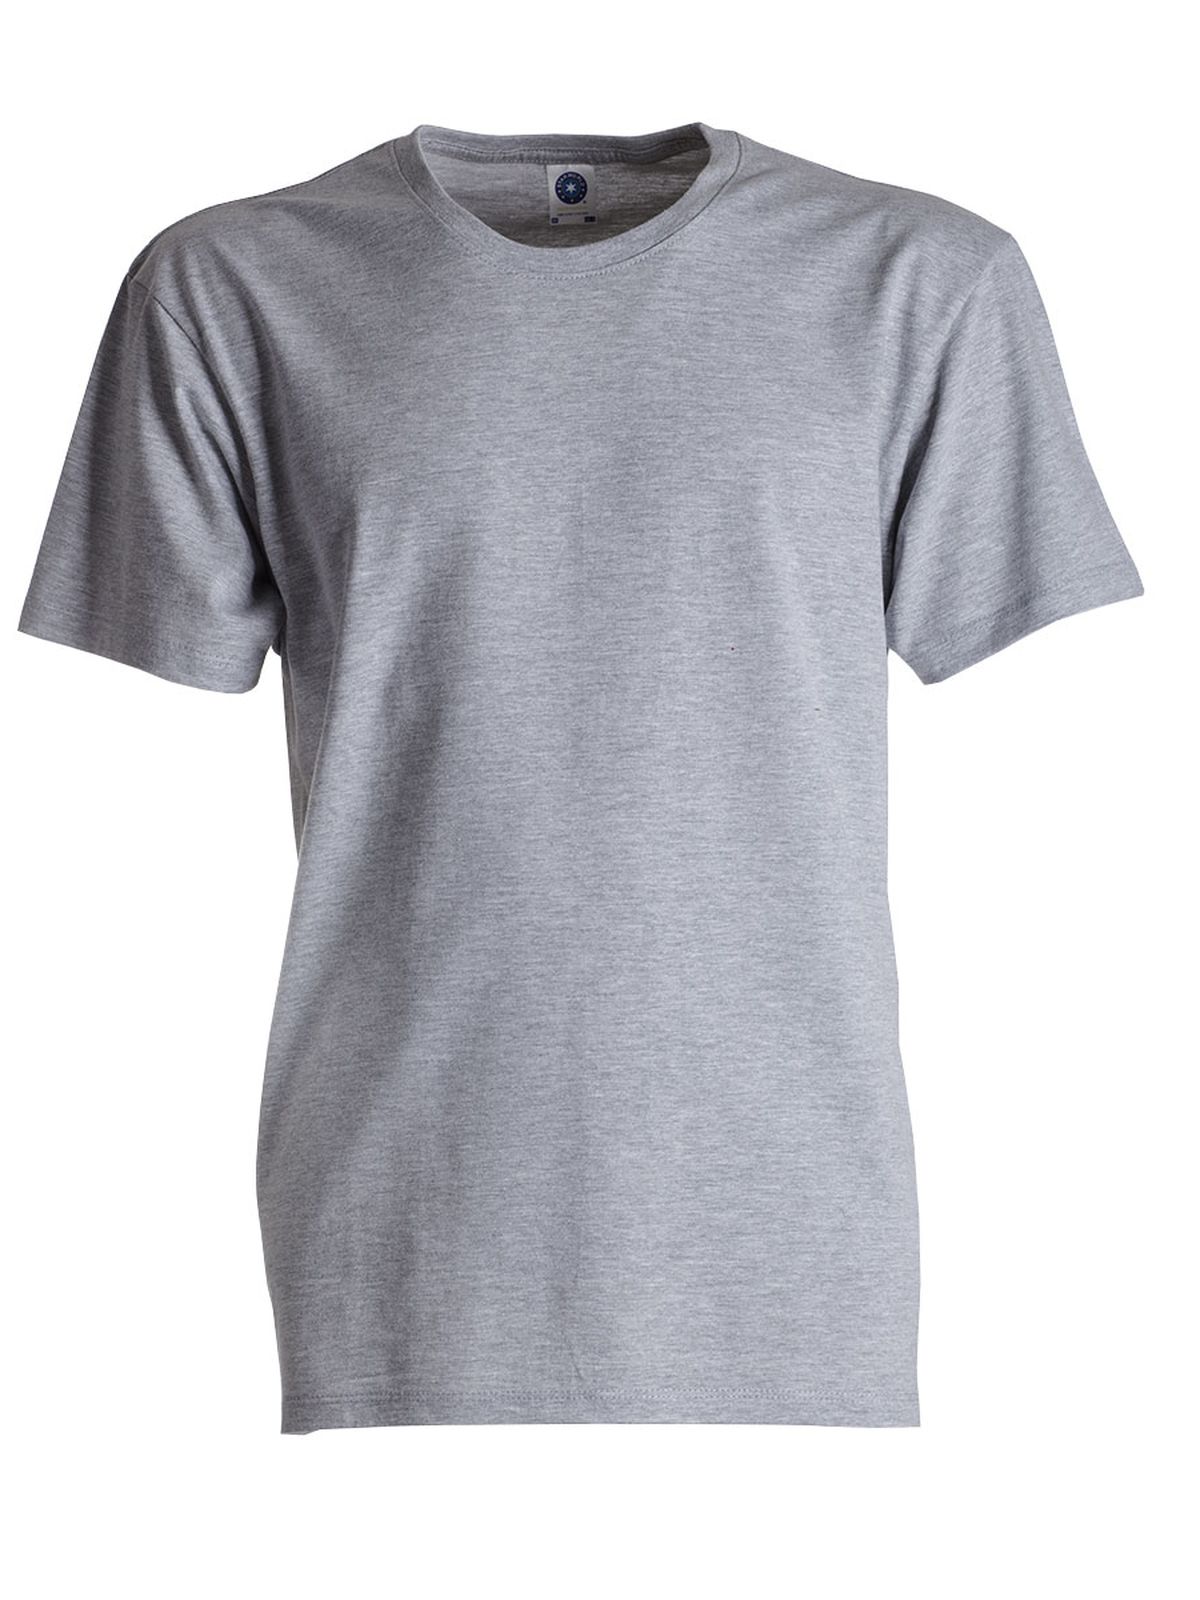 gold-label-mens-retail-t-shirt-heather-grey.webp